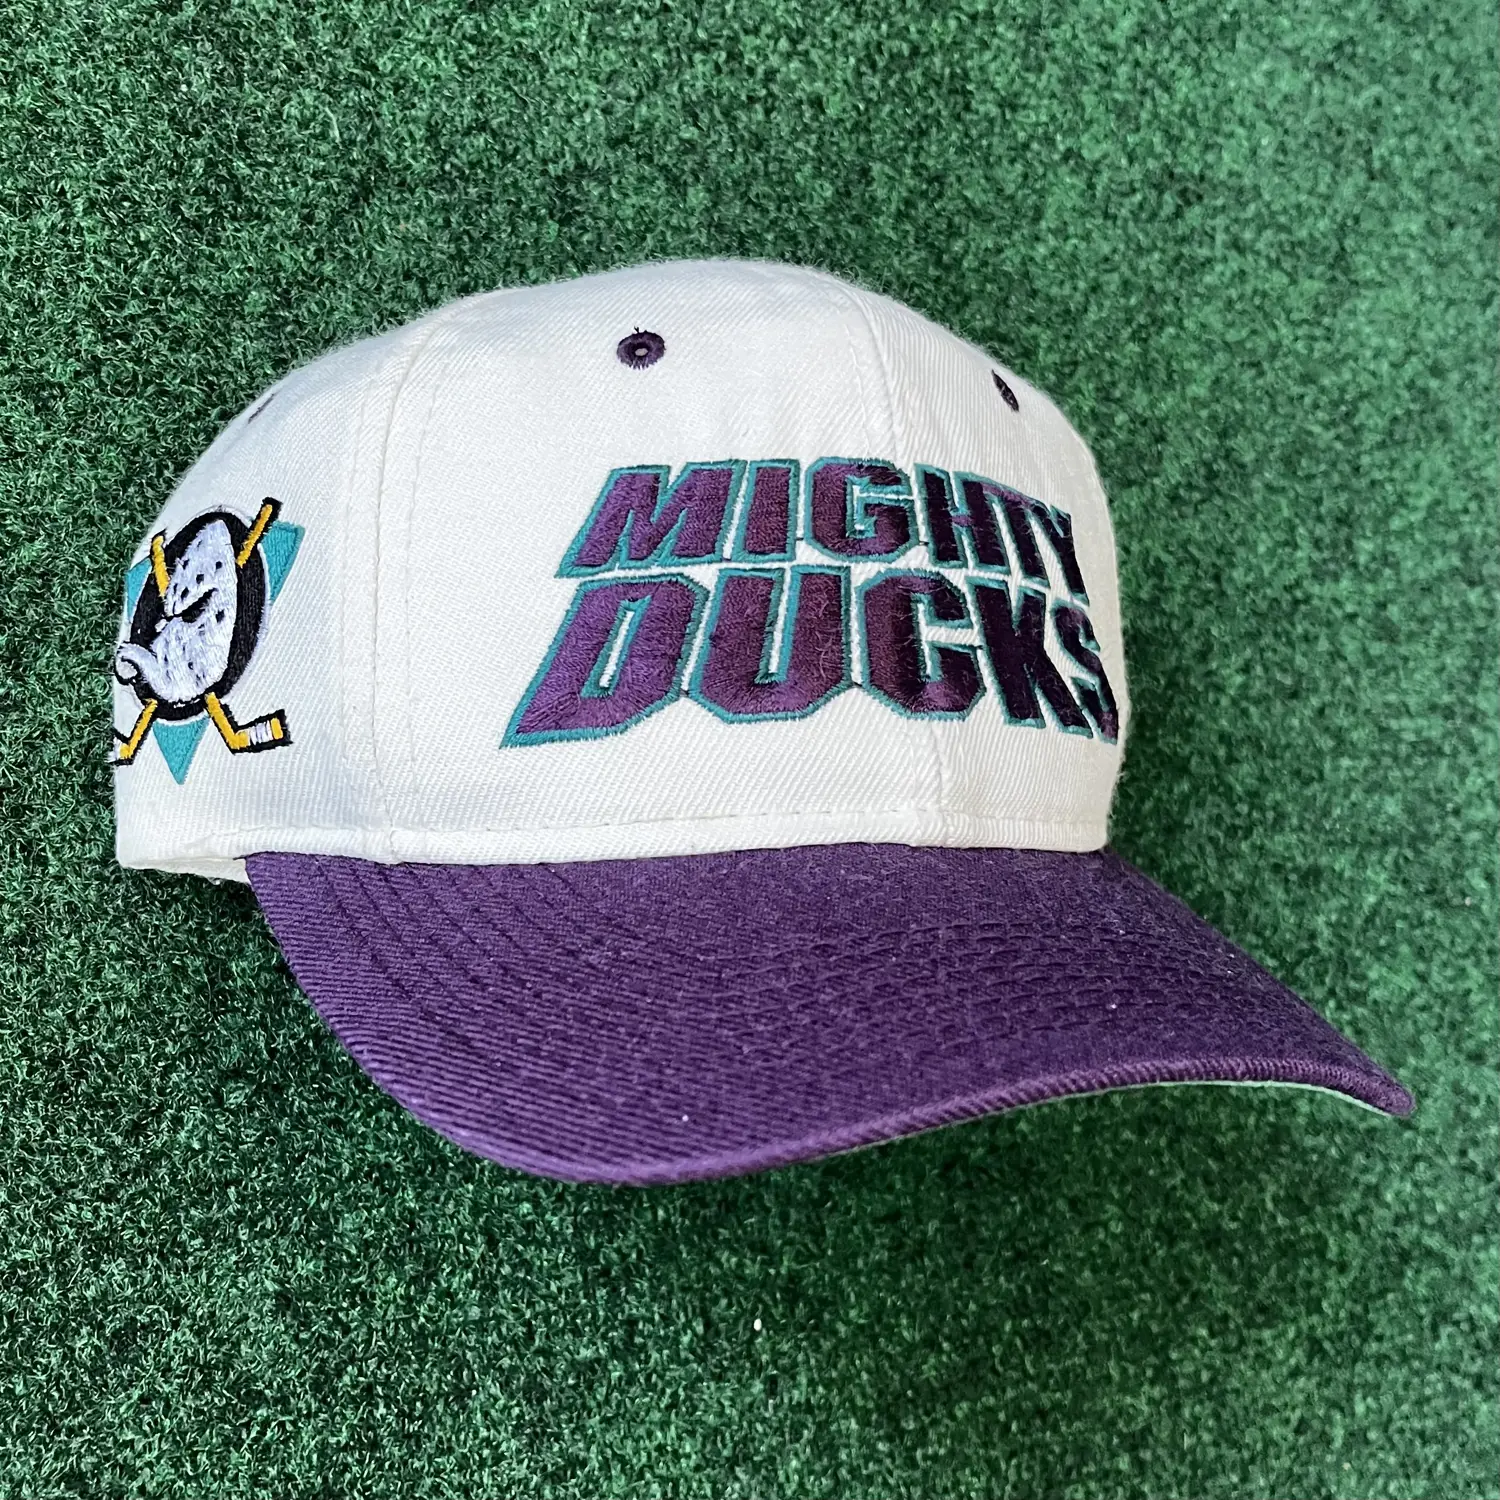 Anaheim Mighty Ducks Snapback